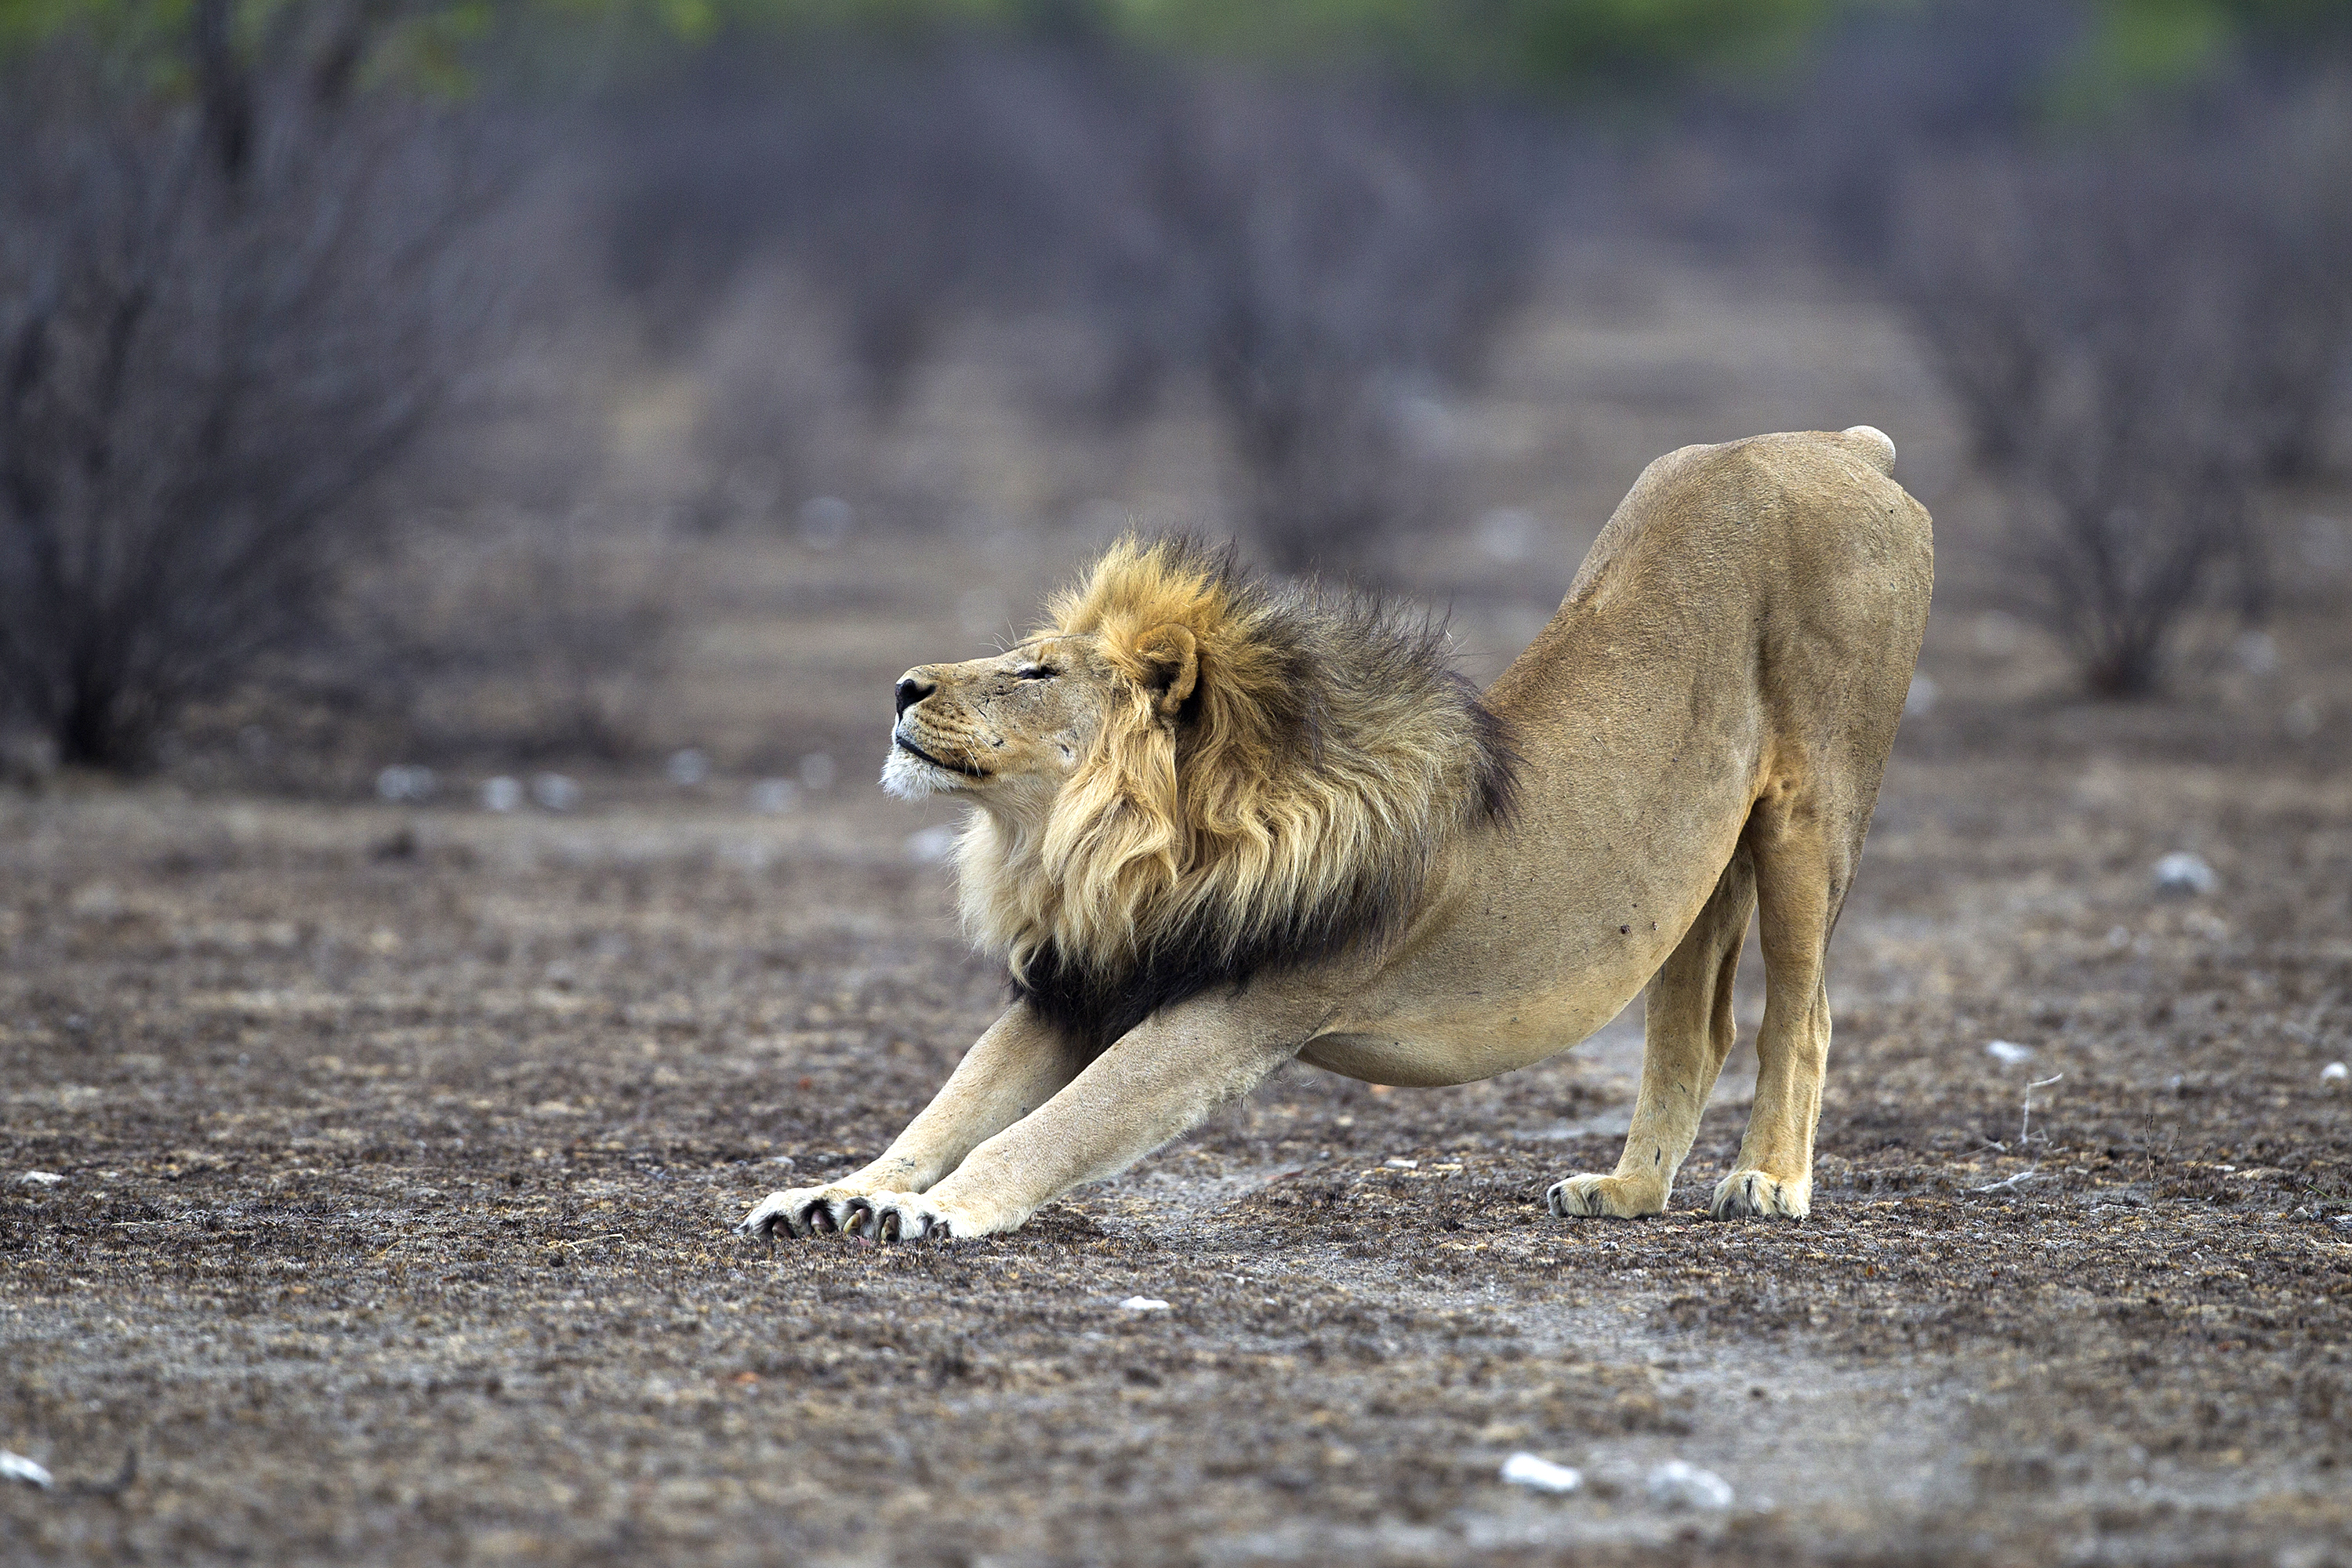 Panthera leo stretching (Etosha, 2012)